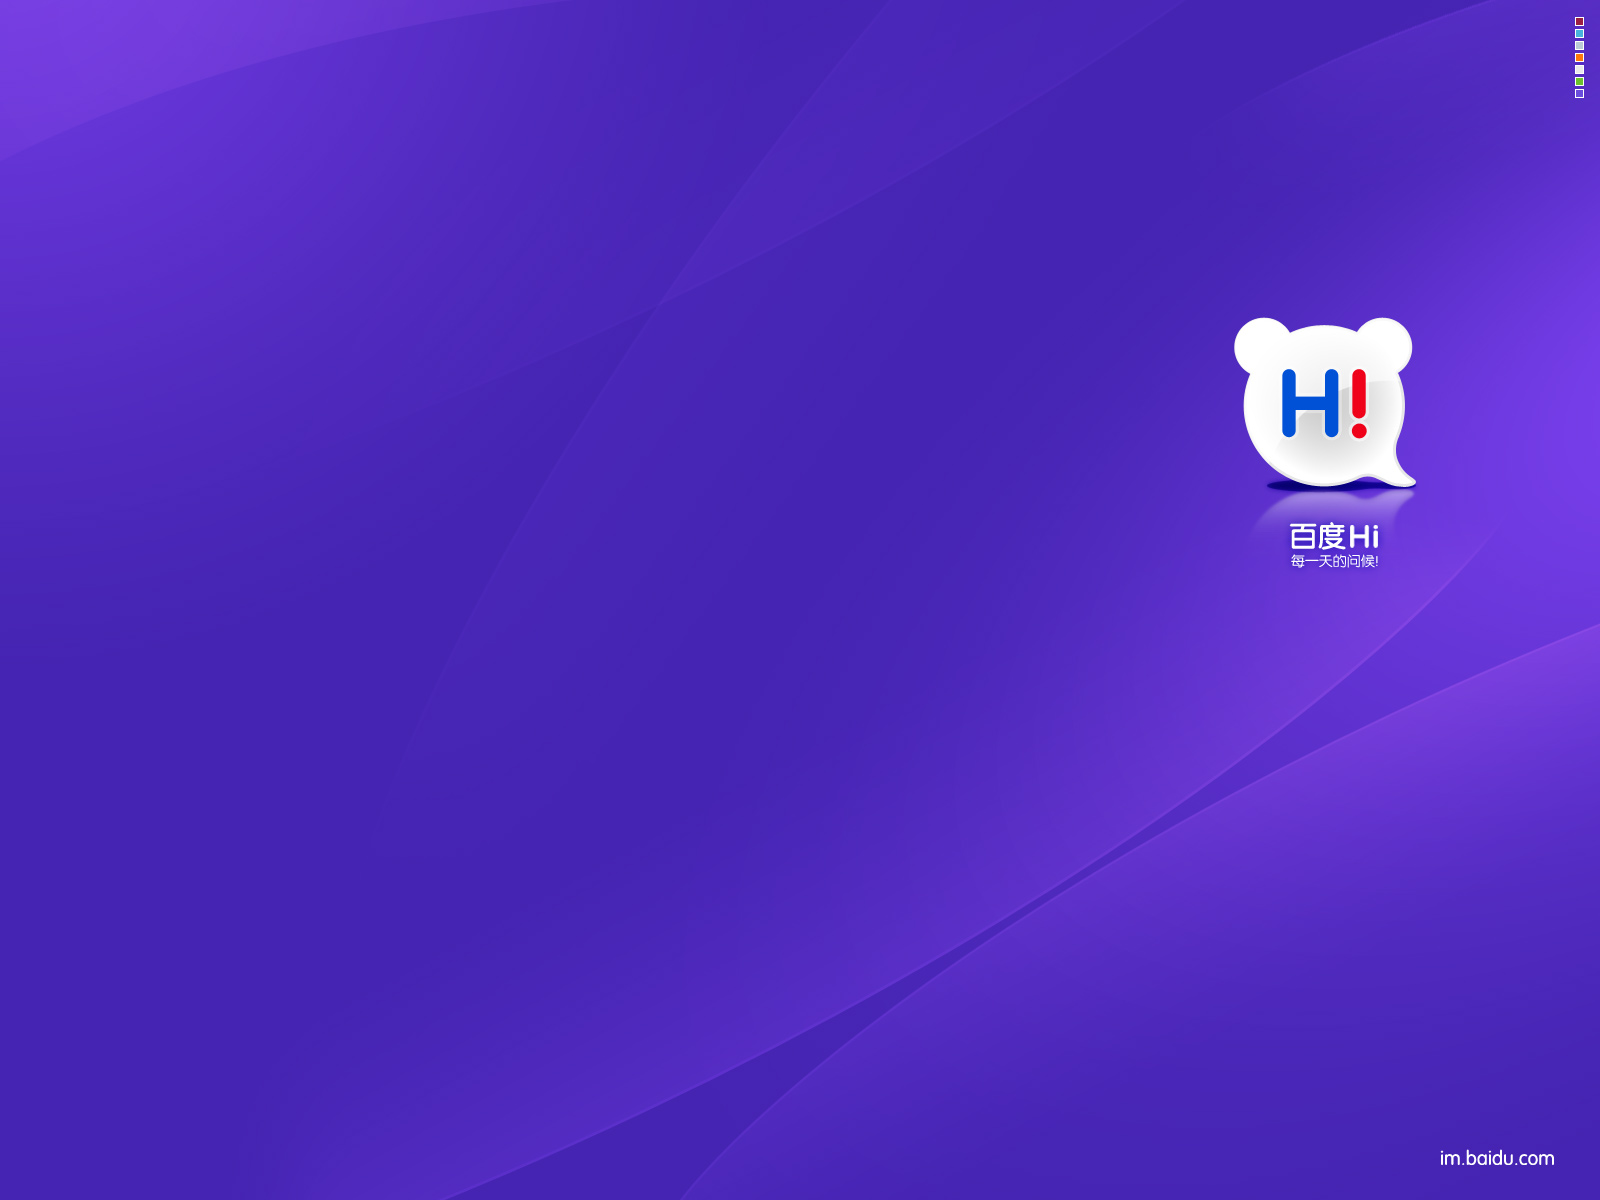 Baixar papéis de parede de desktop Baidu_Oi HD